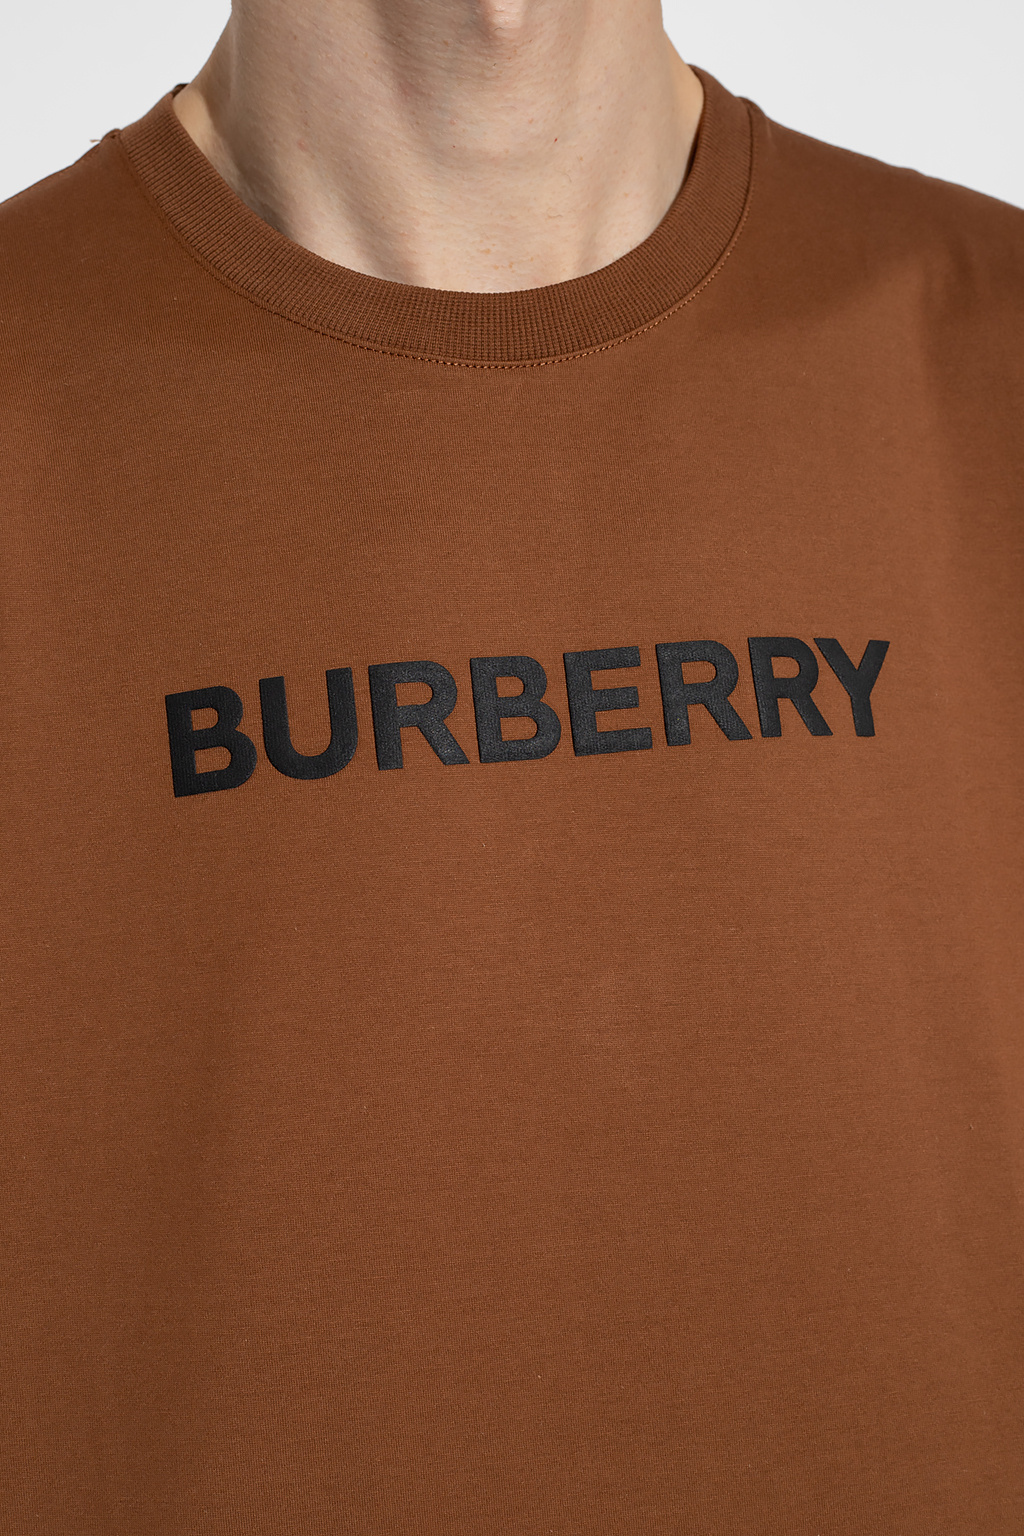 burberry tracksuit ‘Harriston’ T-shirt